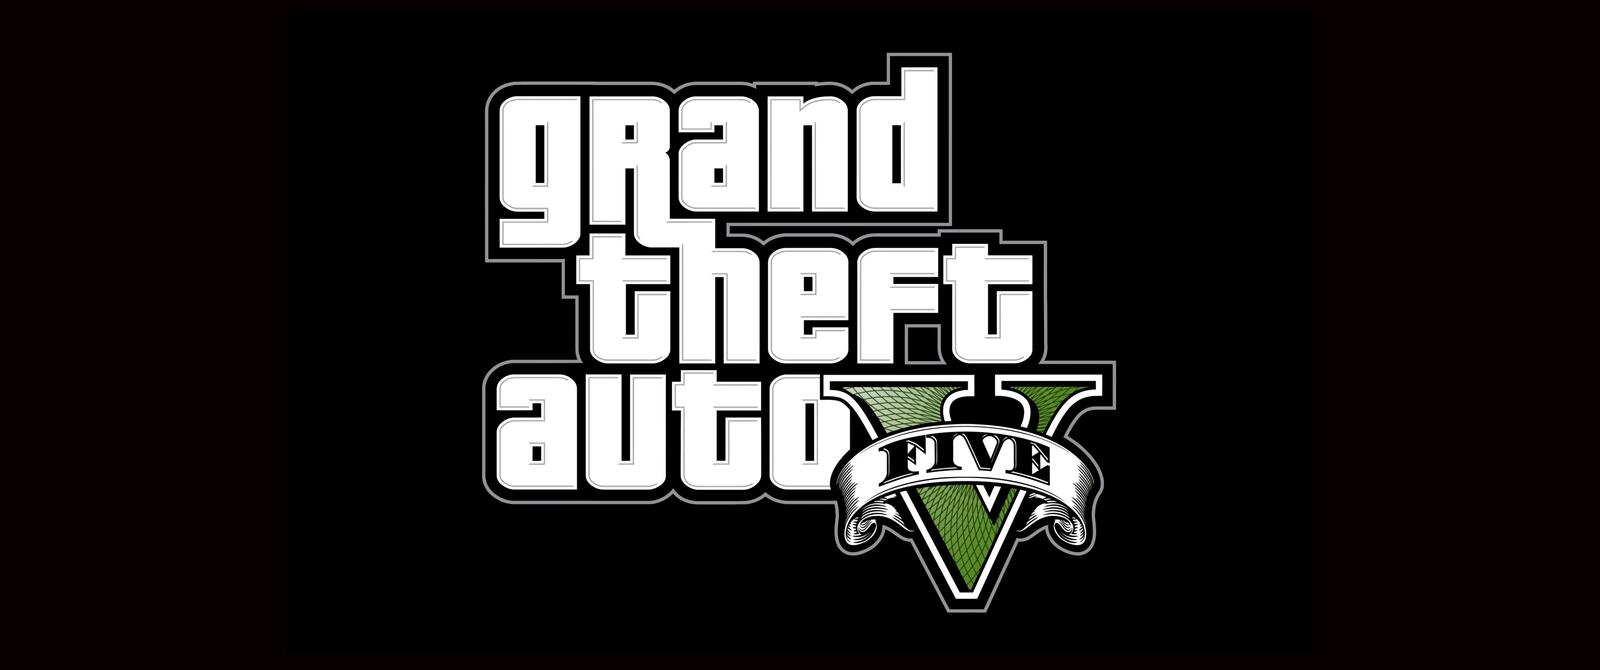 Бесплатное фото Картинка с логотипом Grand Theft Auto V